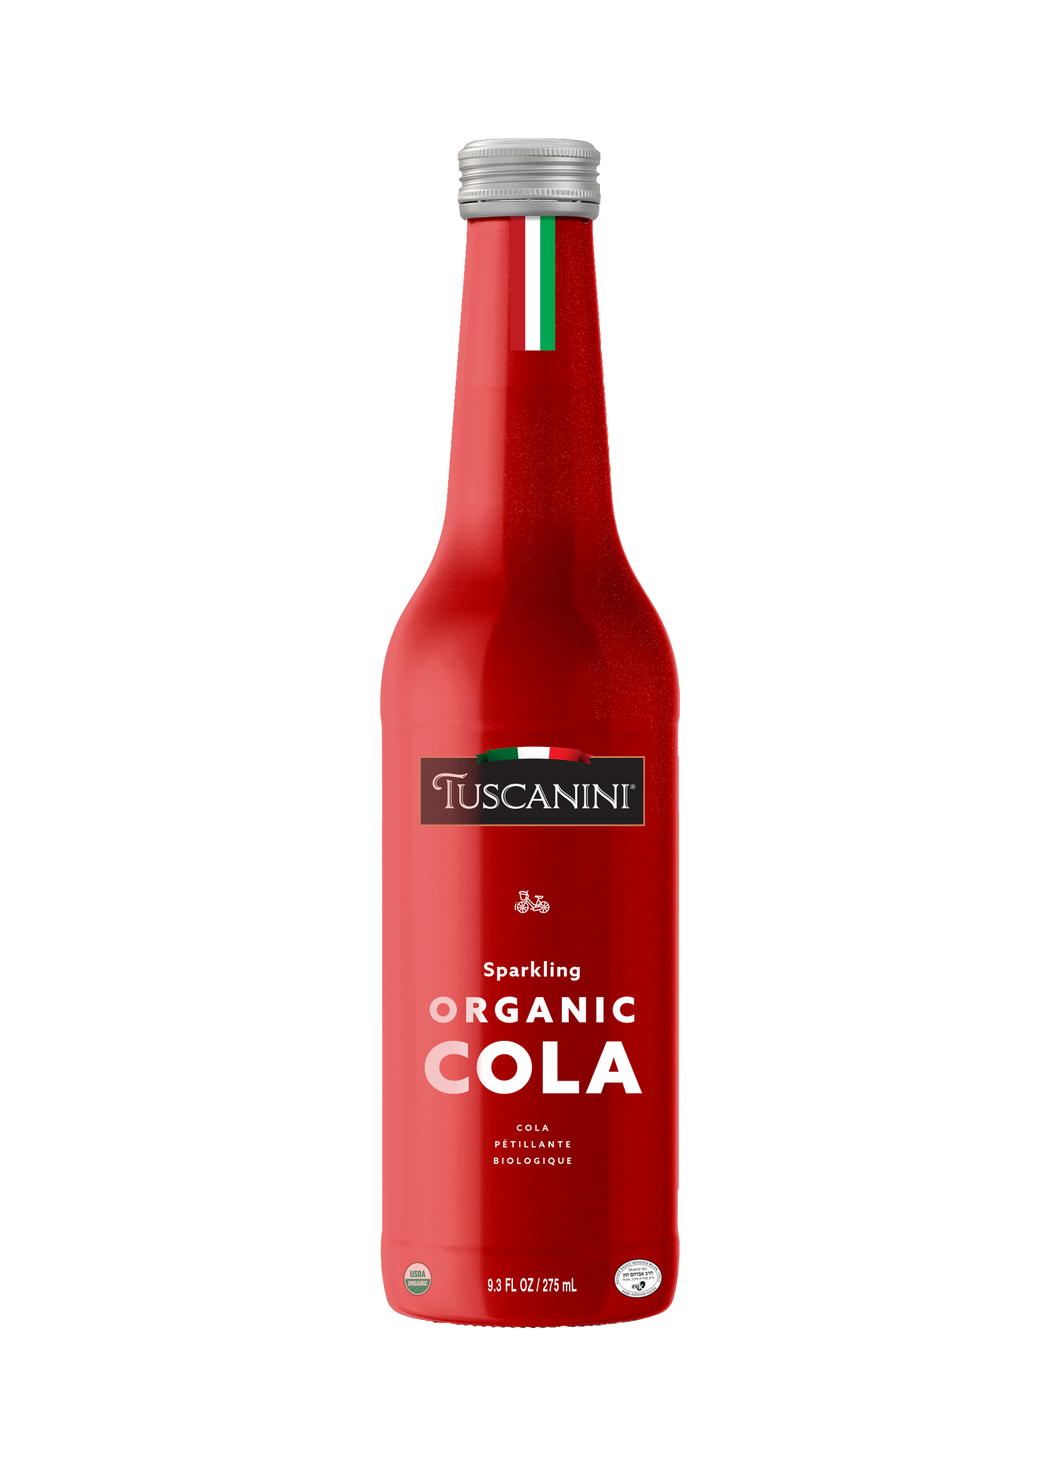 Tuscanini Sparkling Organic Cola 275ml